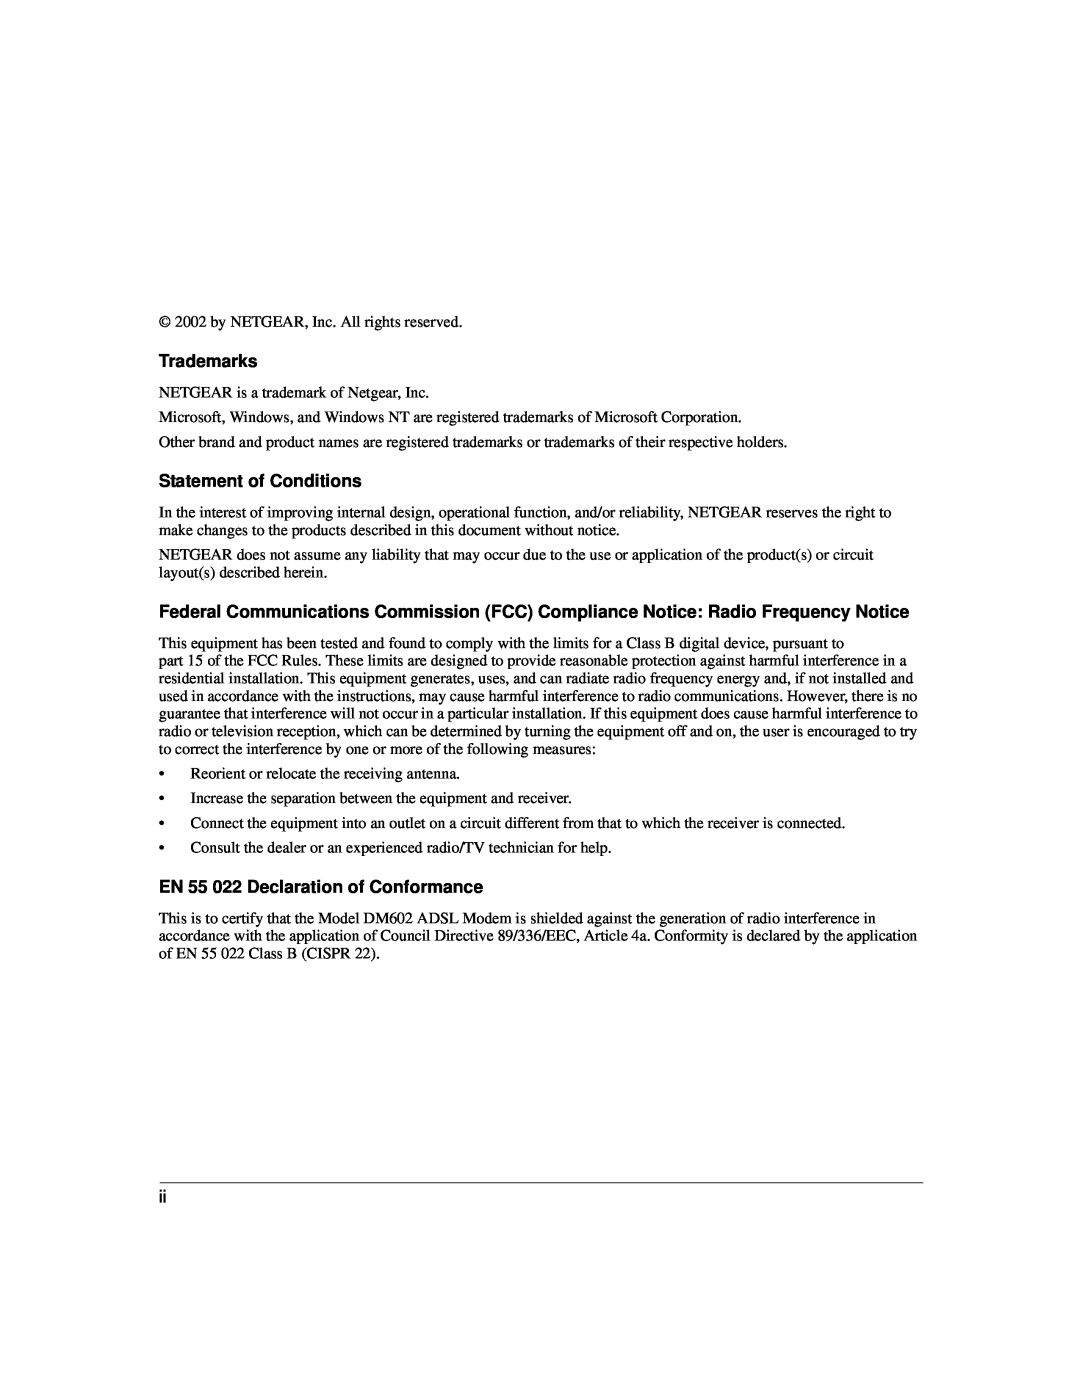 NETGEAR DM602 manual Trademarks, Statement of Conditions, EN 55 022 Declaration of Conformance 